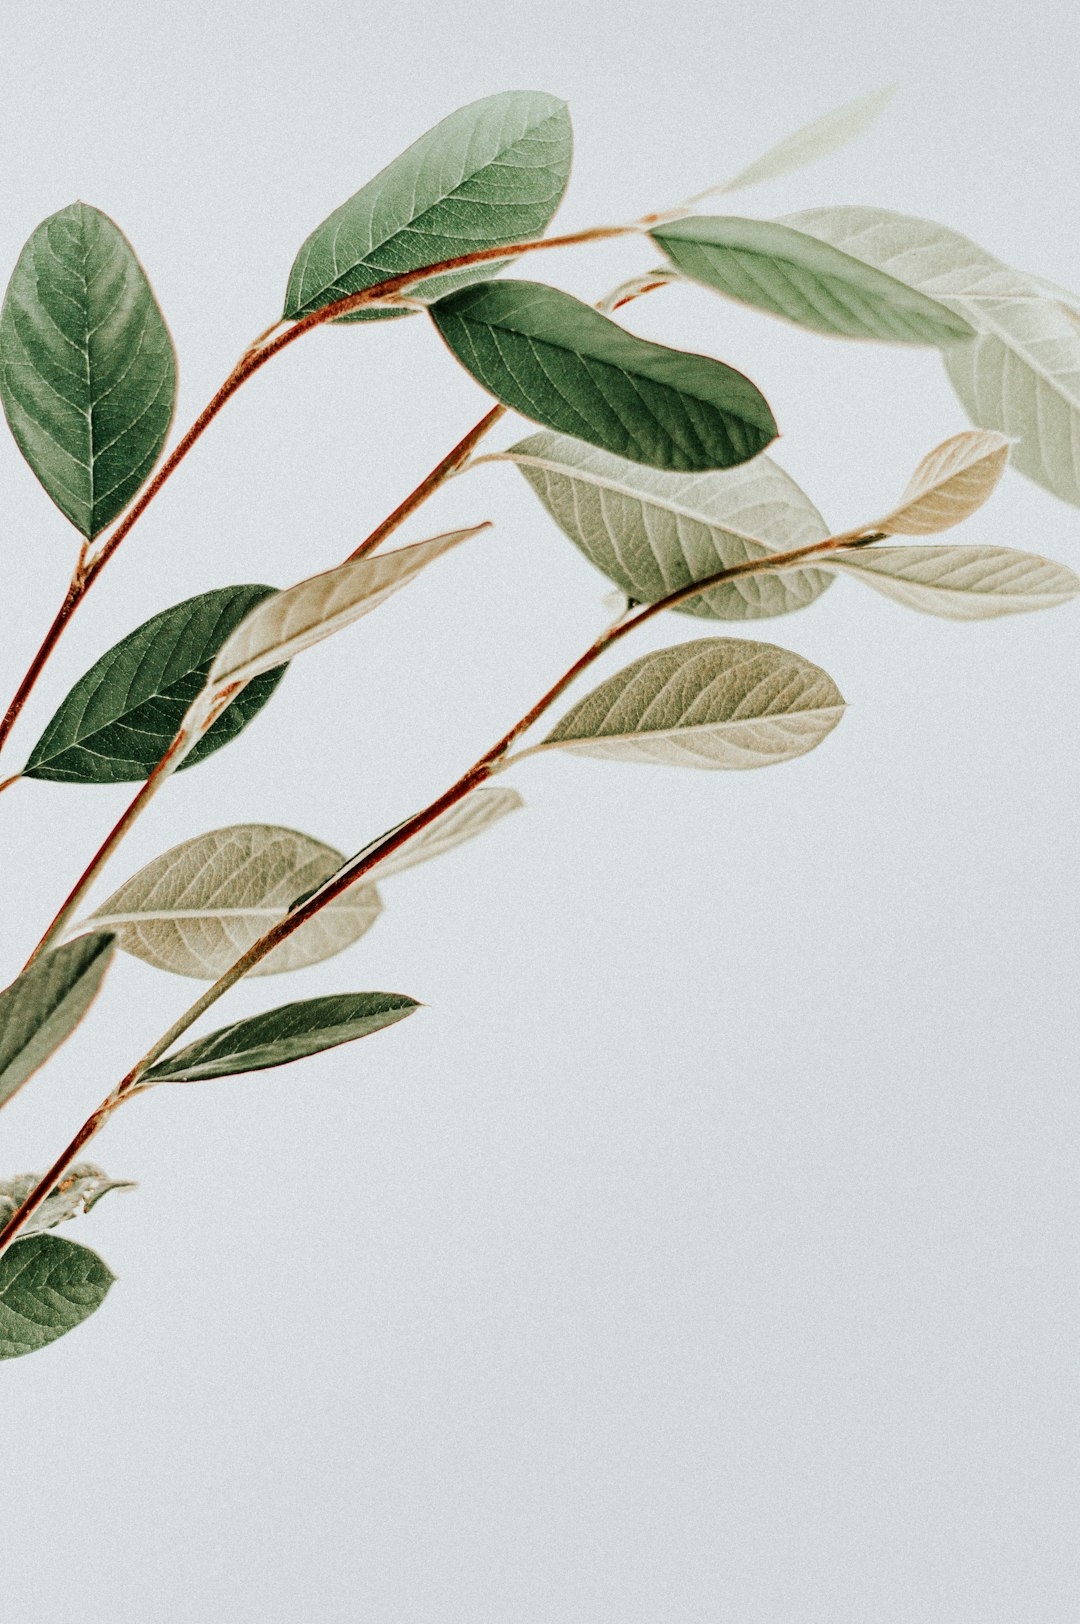 green leaves with white background photo – Free Leaf Image on Unsplash